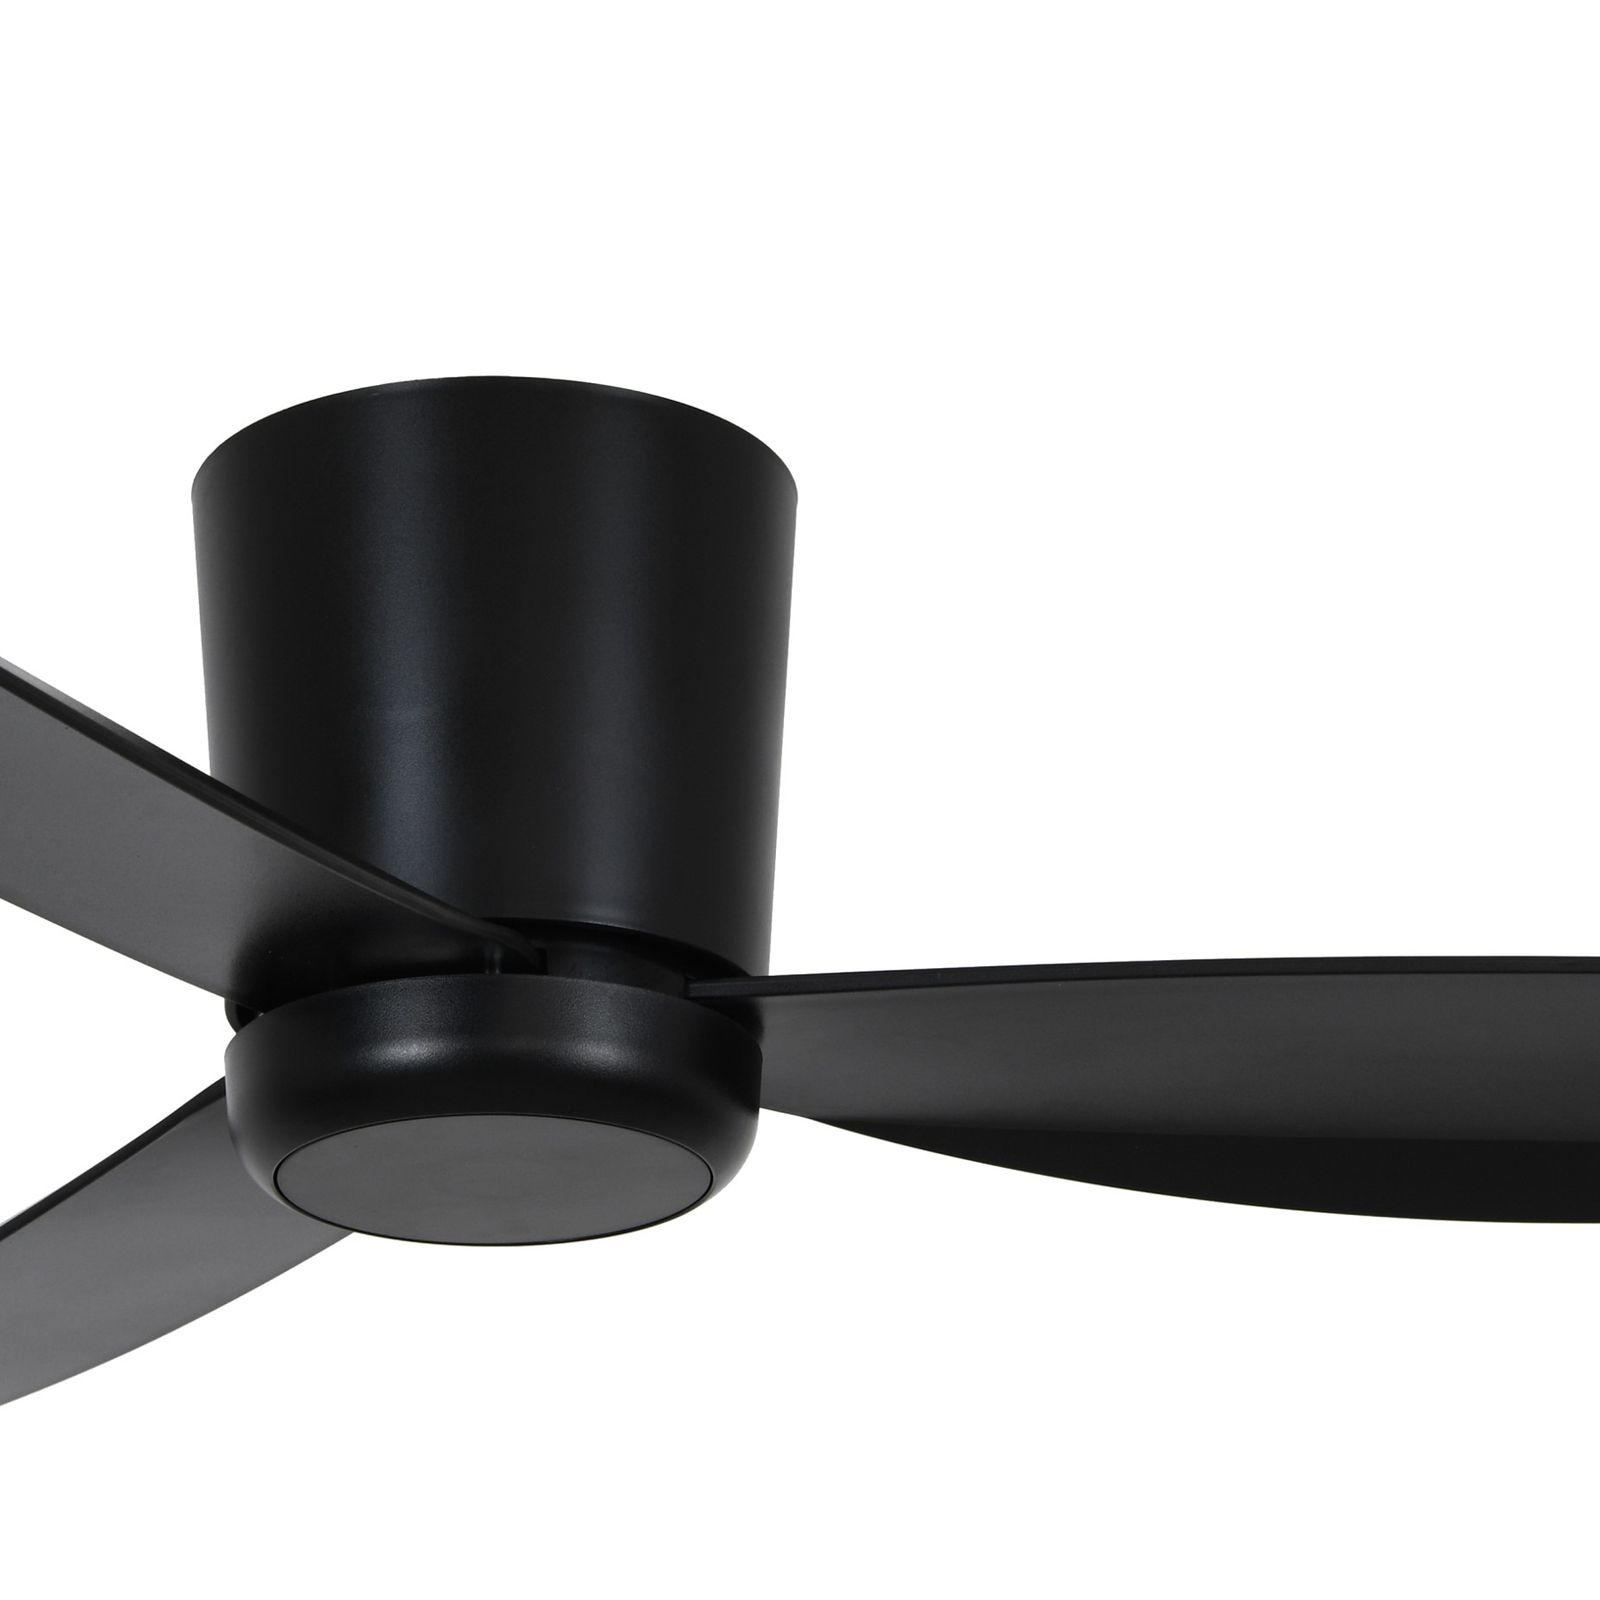 Beacon ceiling fan with light Array black 137 cm quiet